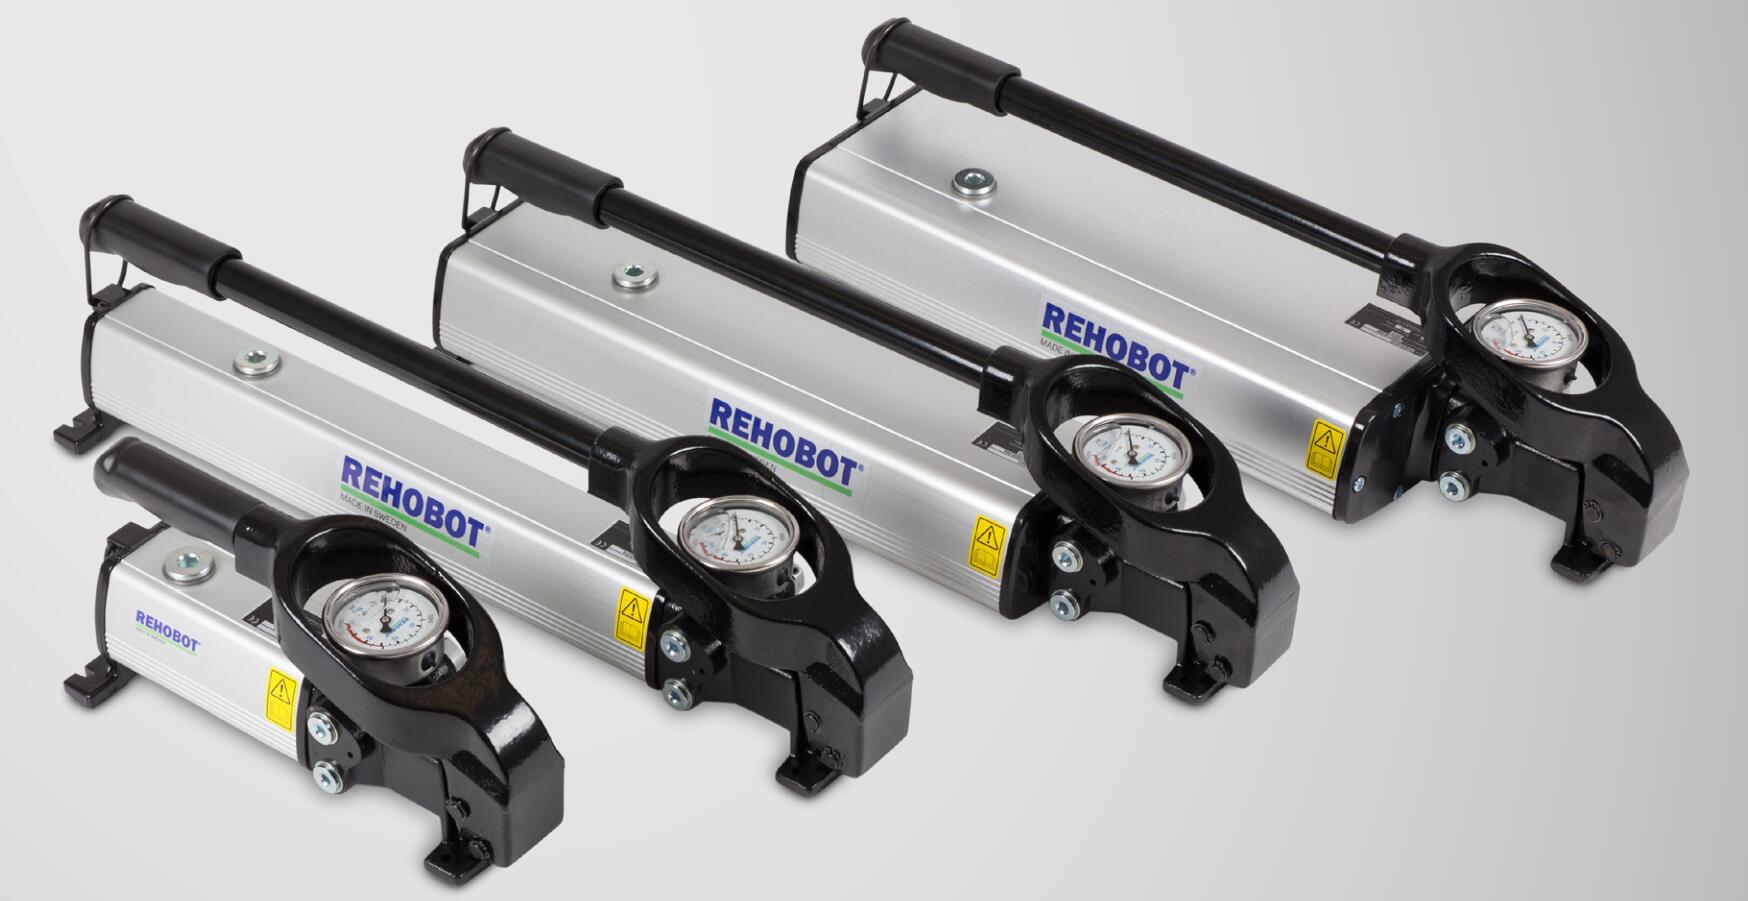 rehobot高压泵厂家 rehobot高压泵图片 rehobot高压泵资料 价格